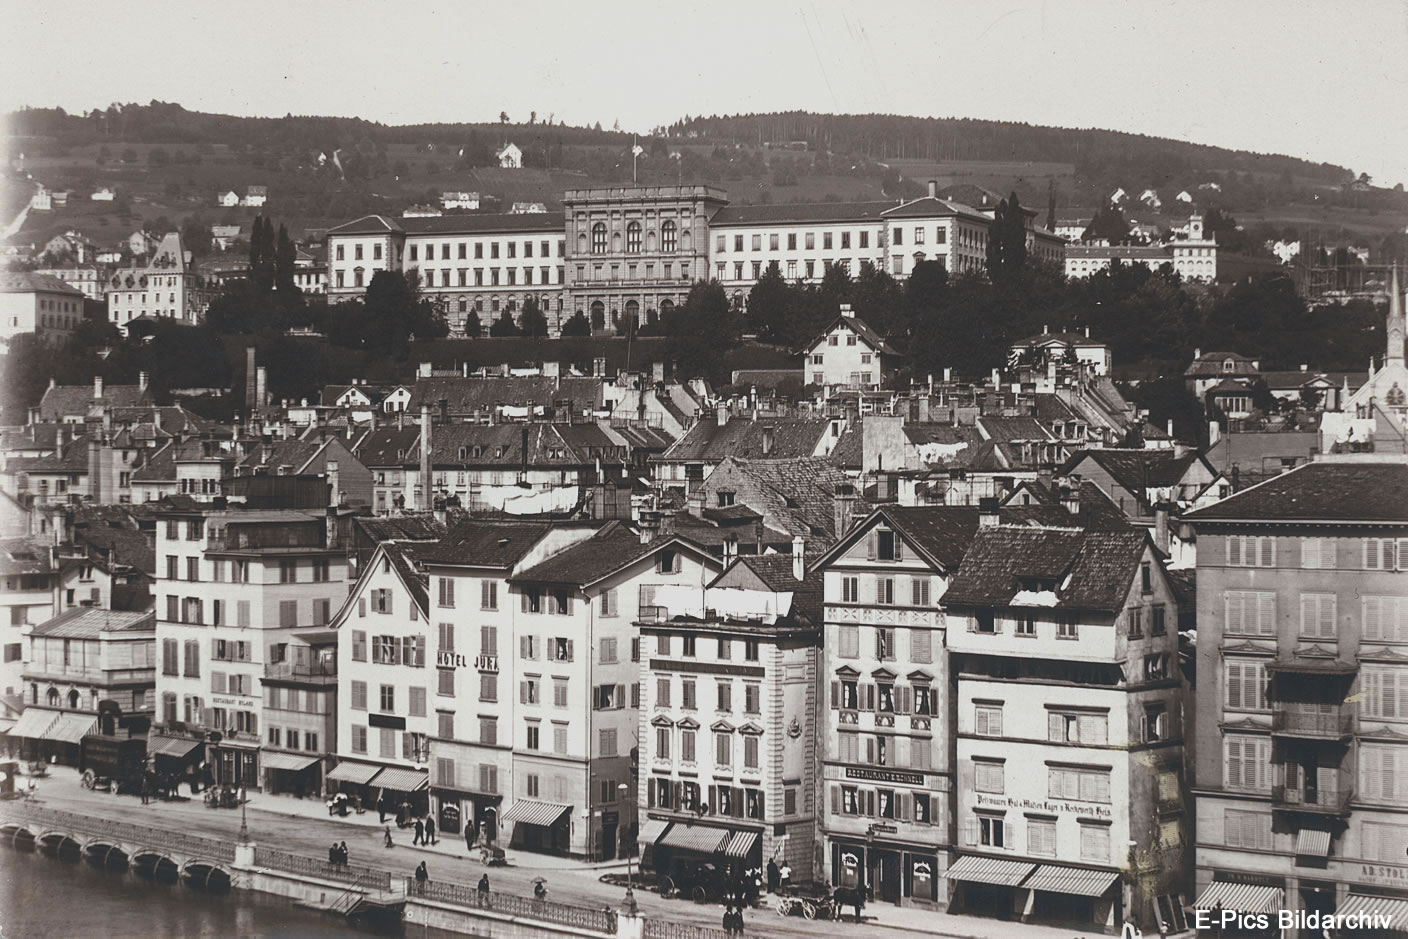 The Zurich University Quarter seen from the Limmat